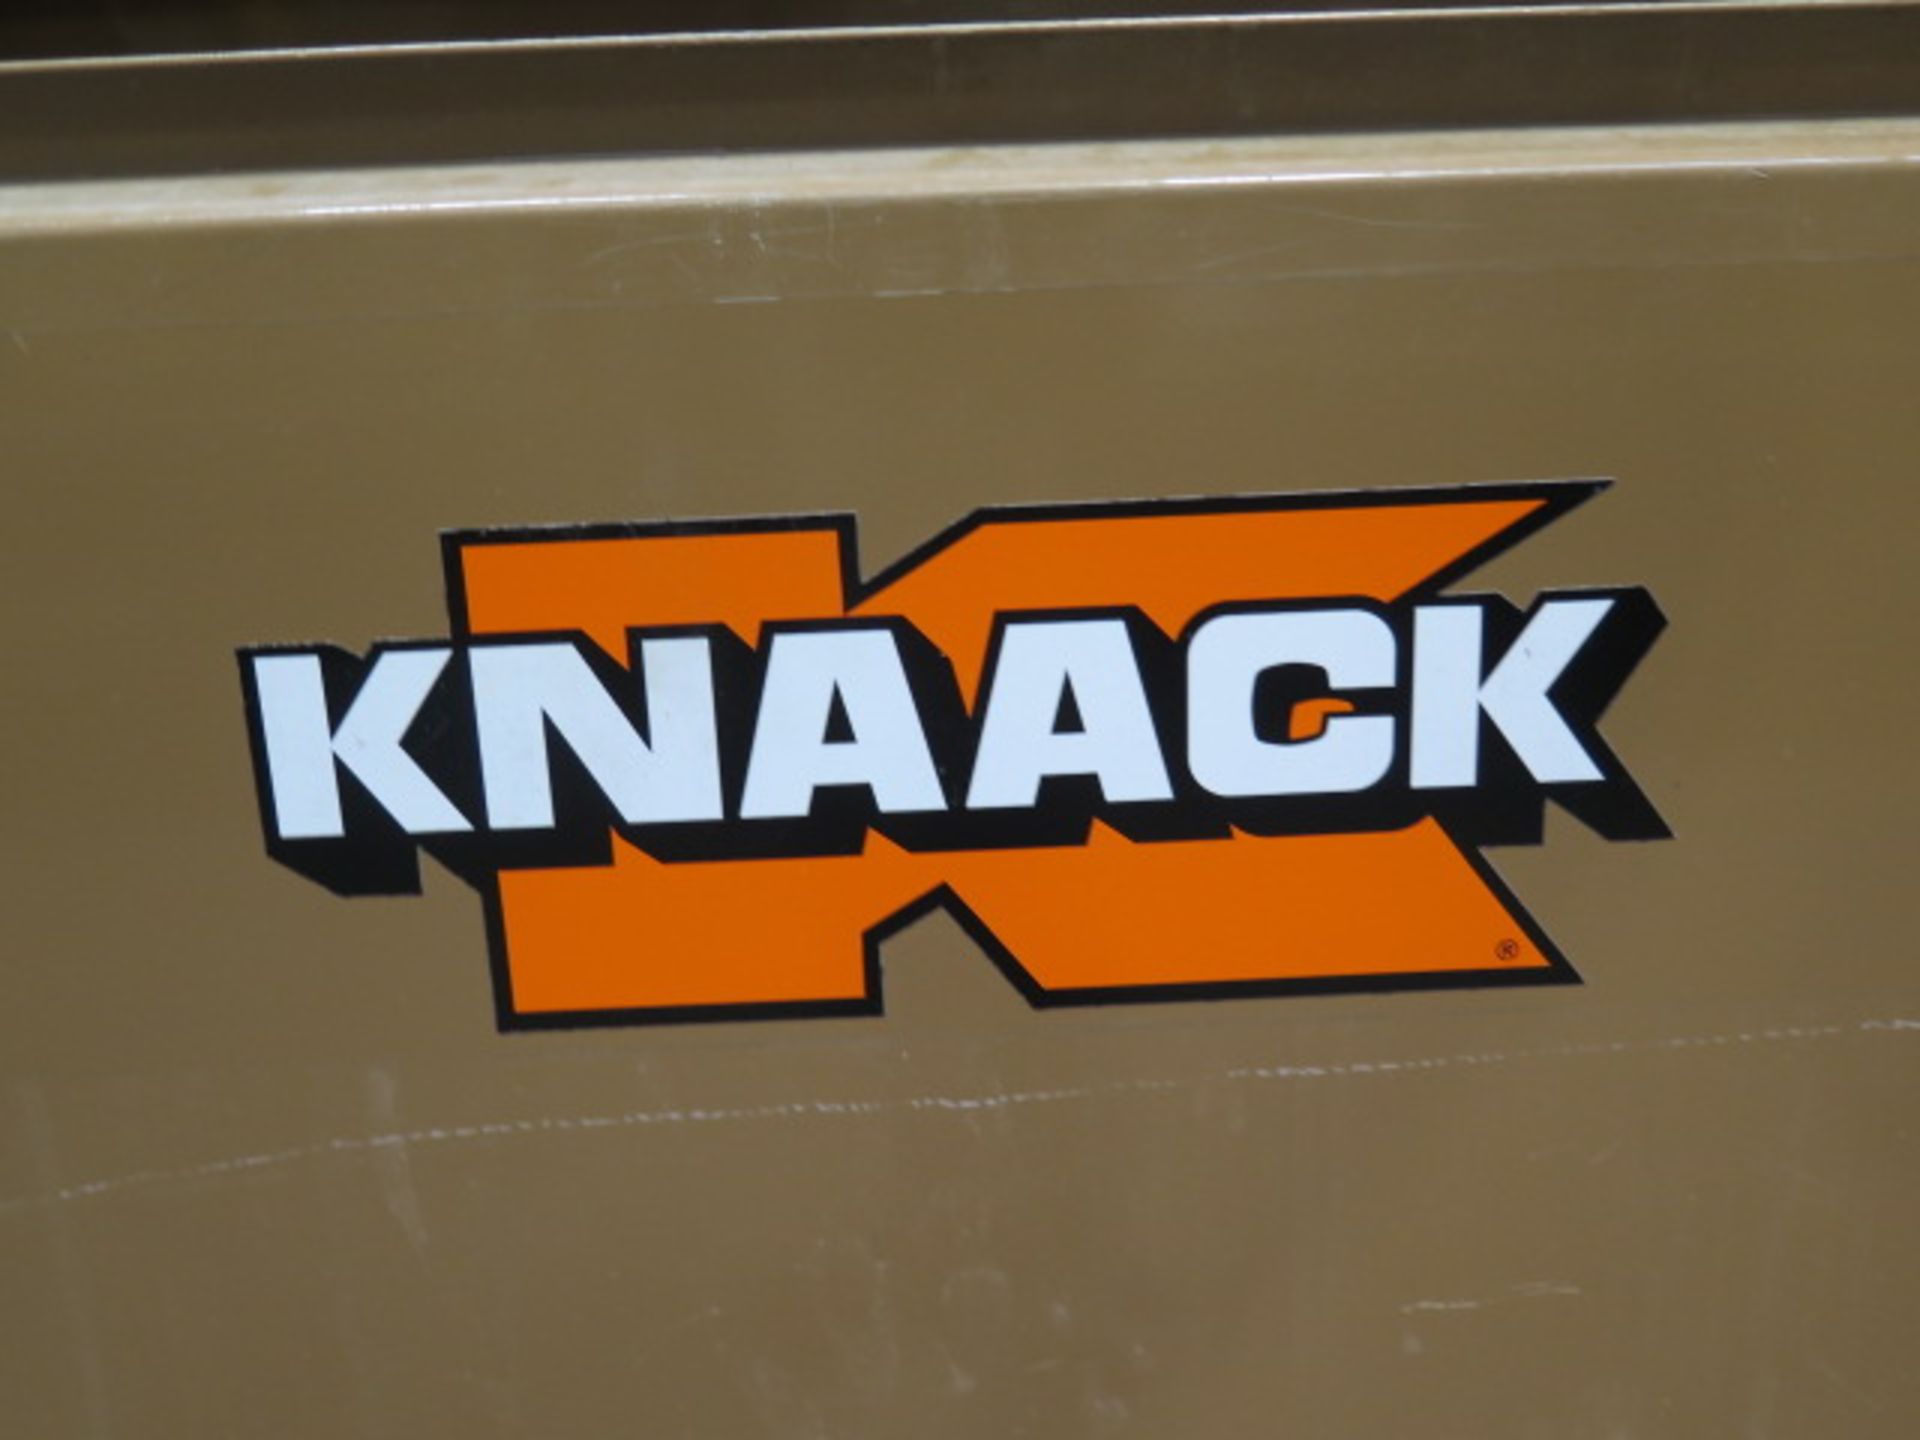 Knaack mdl. 3068 Rolling Job Box (SOLD AS-IS - NO WARRANTY) - Image 4 of 5